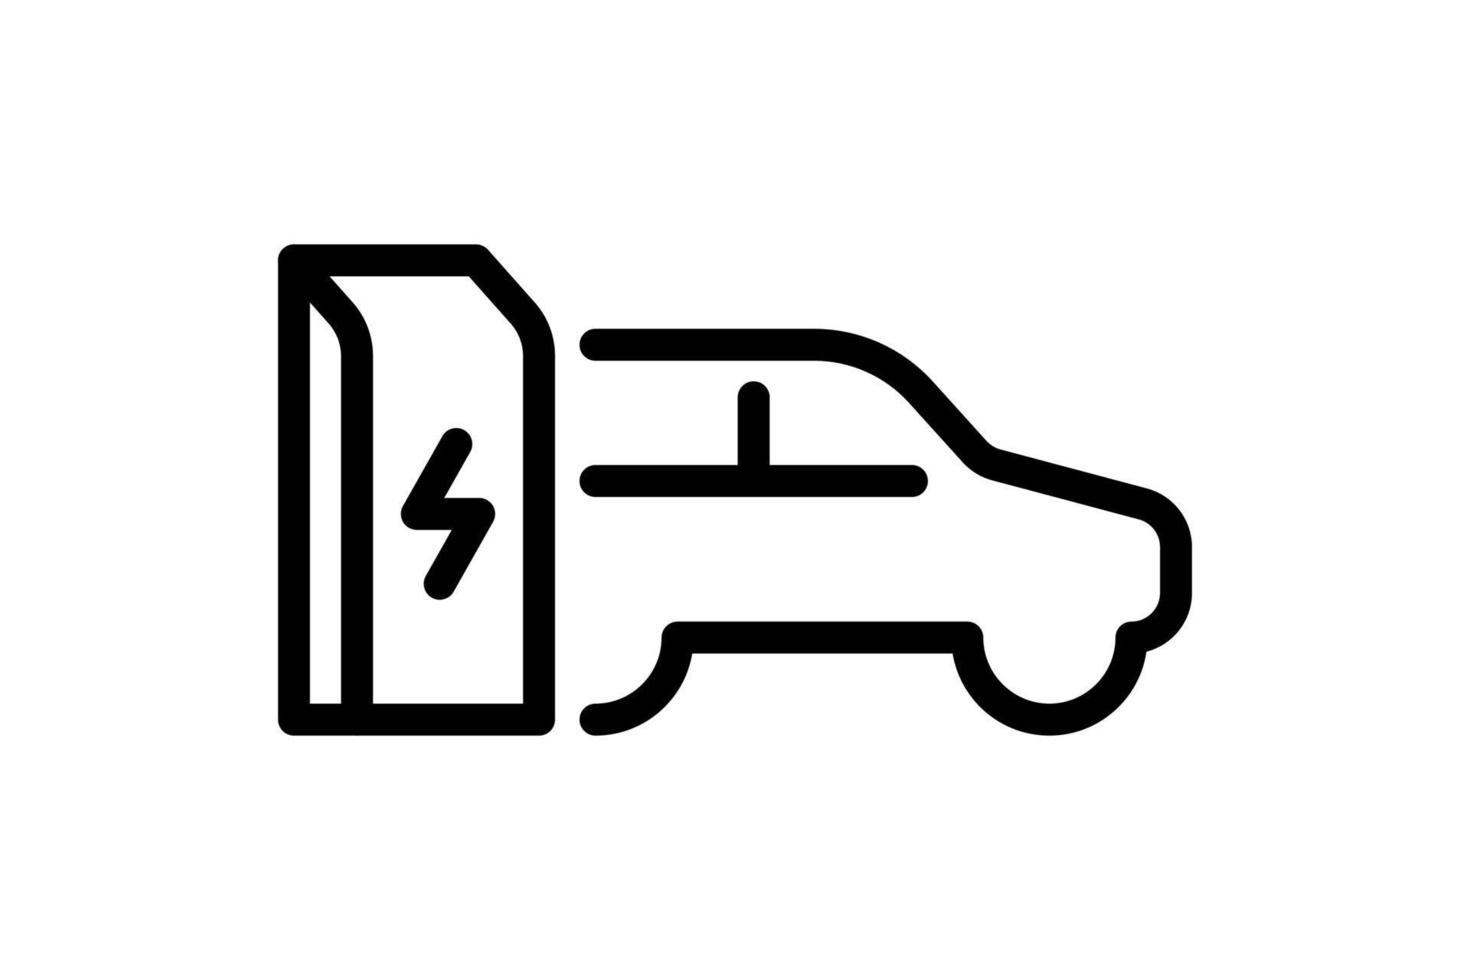 coche eléctrico cargando en la estación de carga icono negro lineal. símbolo de carga de energía automática eléctrica. signo de recarga de vehículos eléctricos ecológicos. vector alimentado por batería ev transporte eps logo